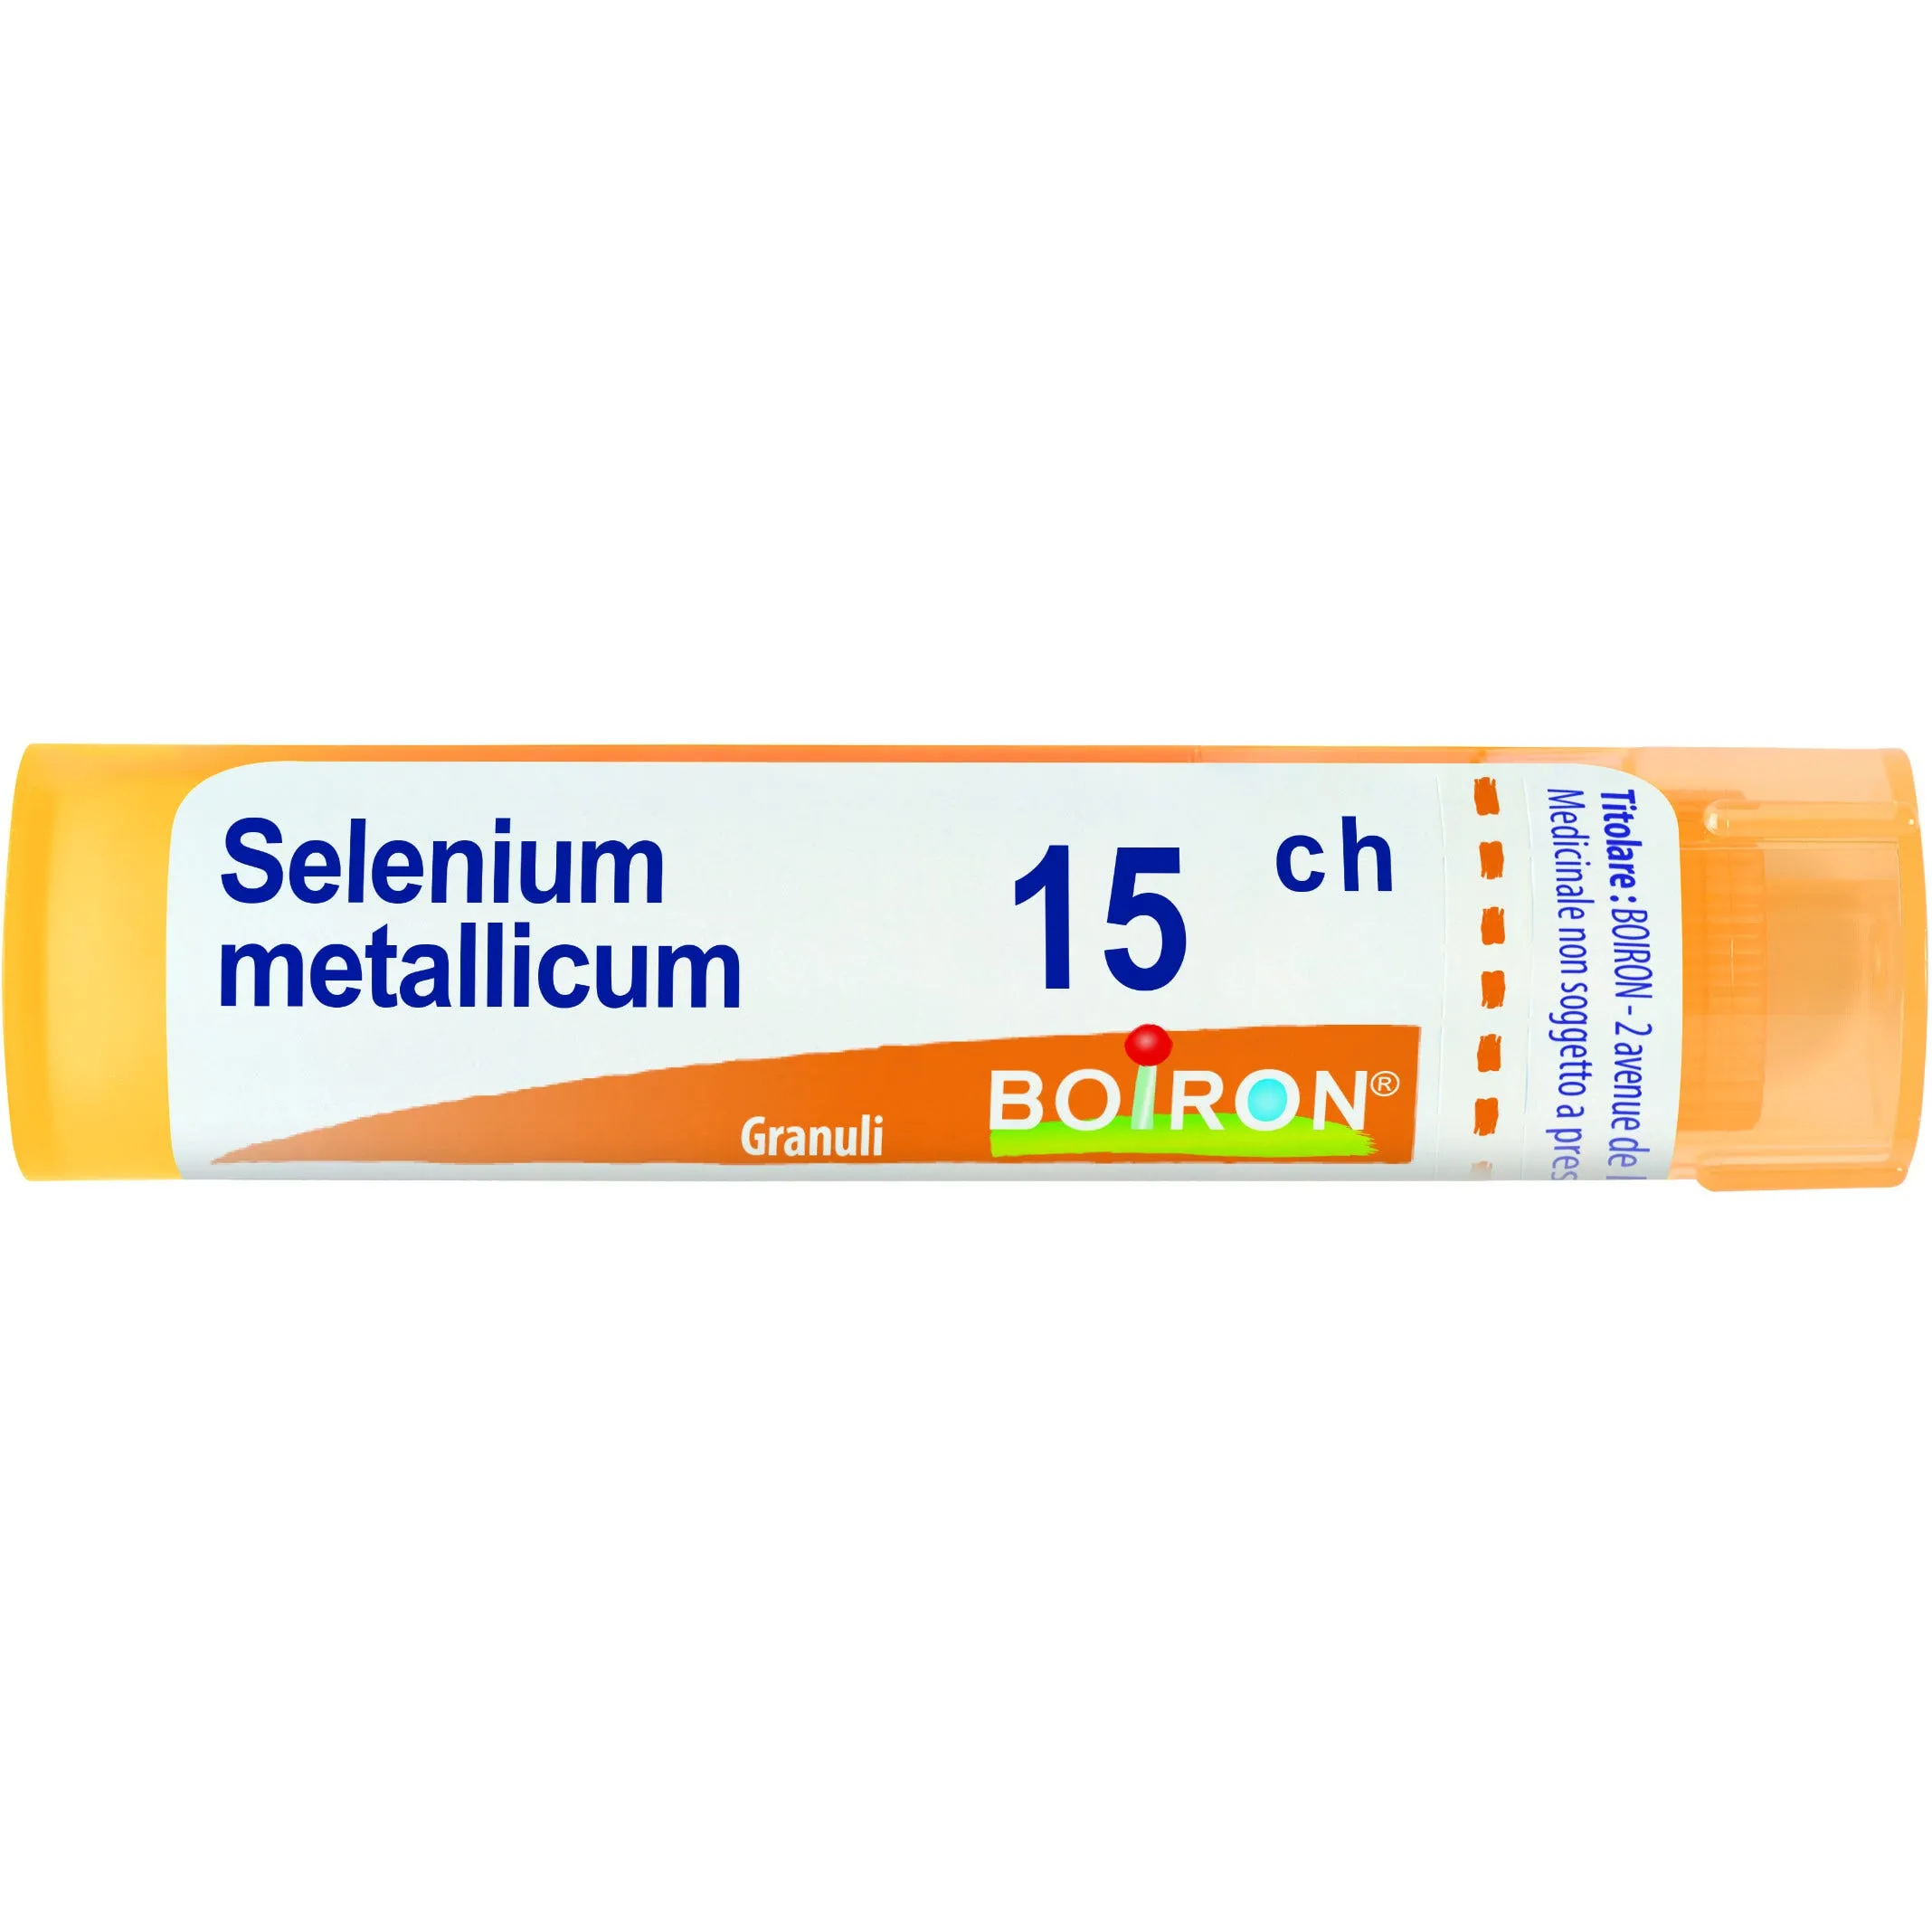 Selenium Metallicum 15 Ch 80 Gr 